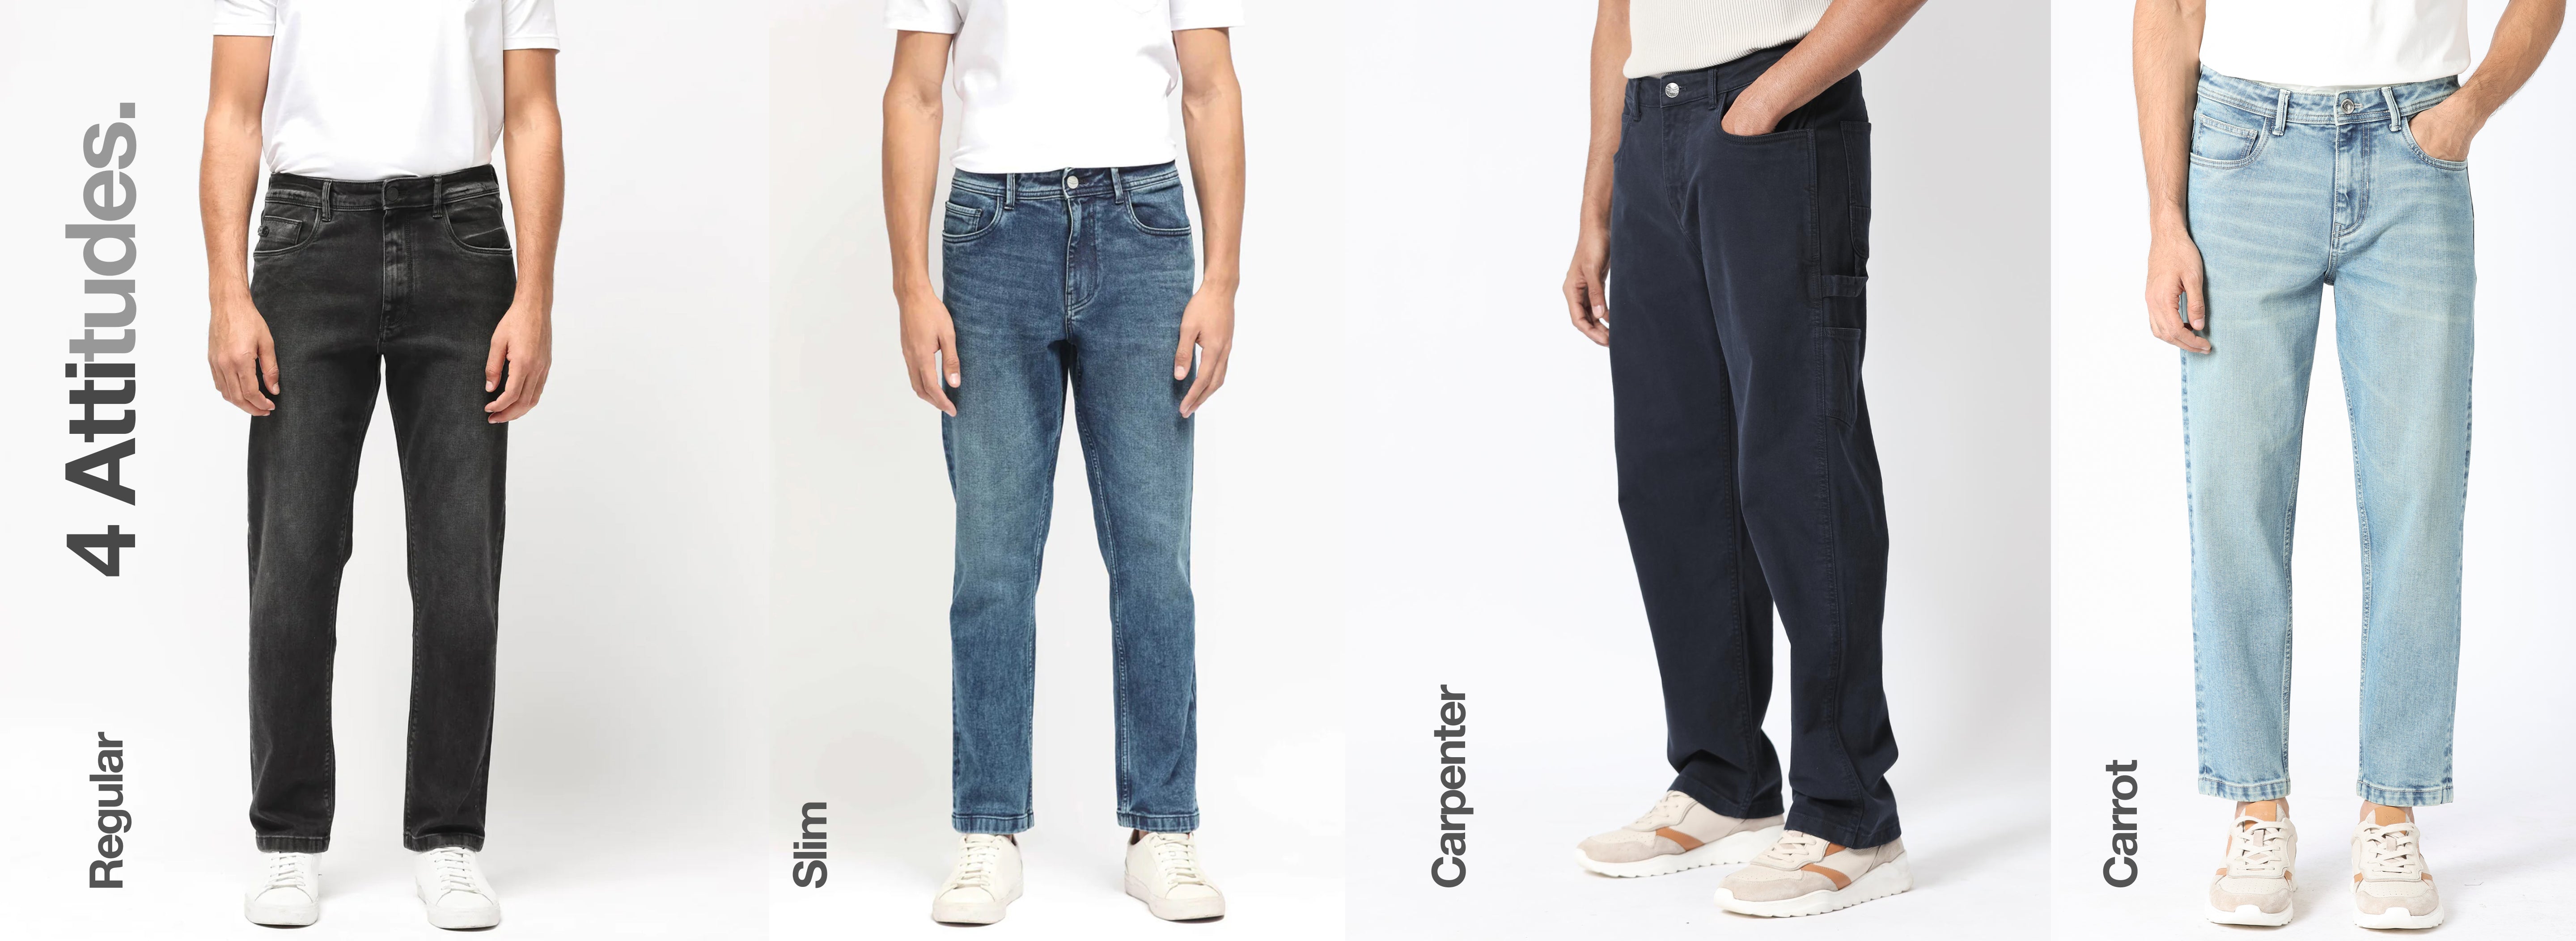 Men jeans denim pants fit types guideline Vector Image